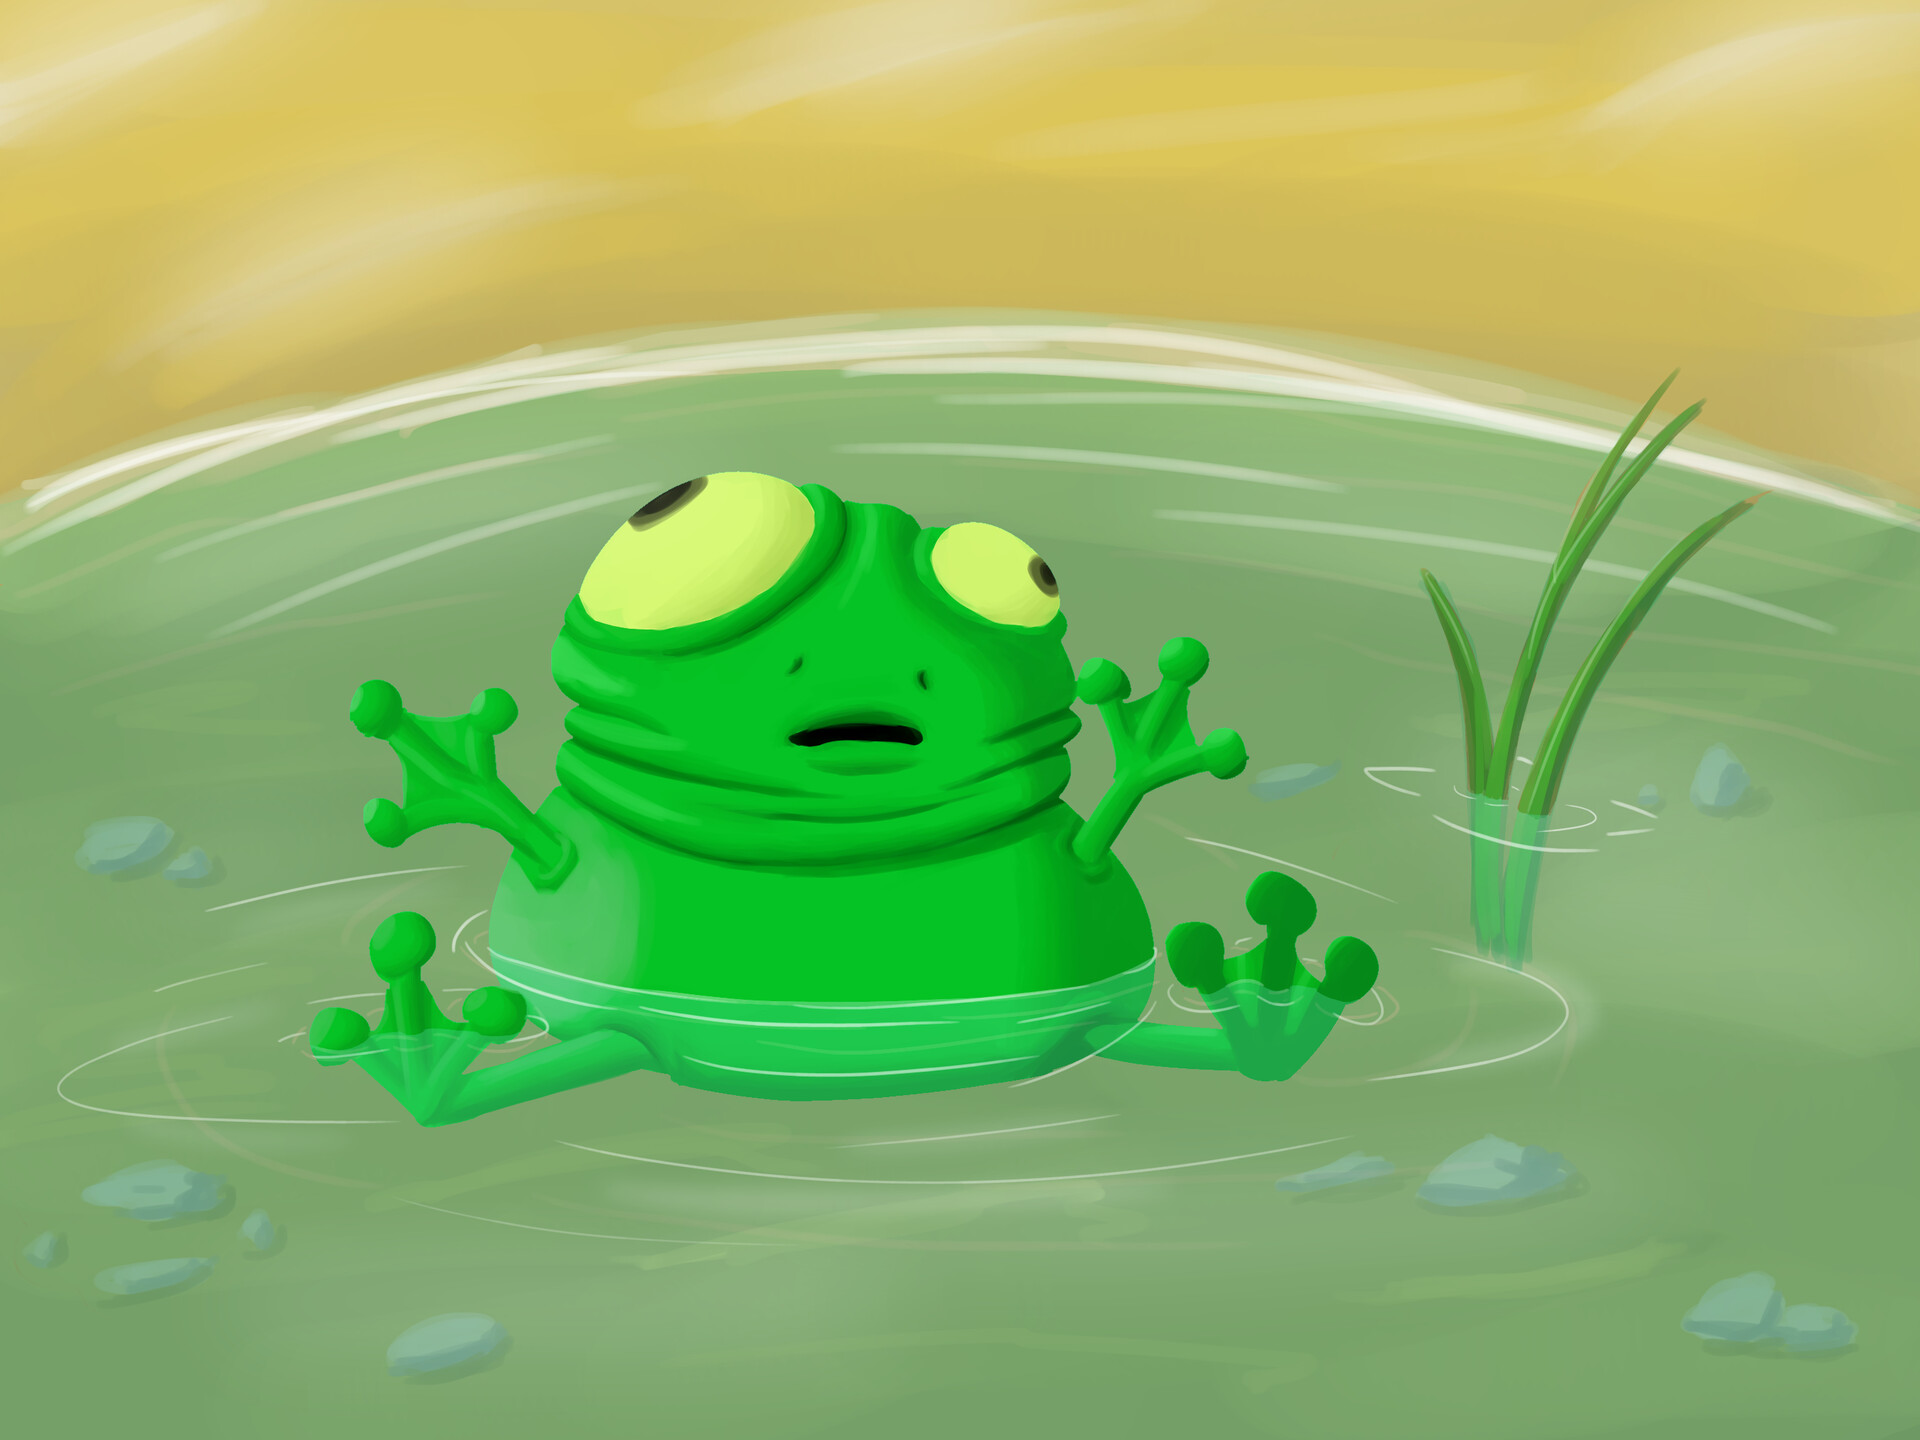 Fat Frog